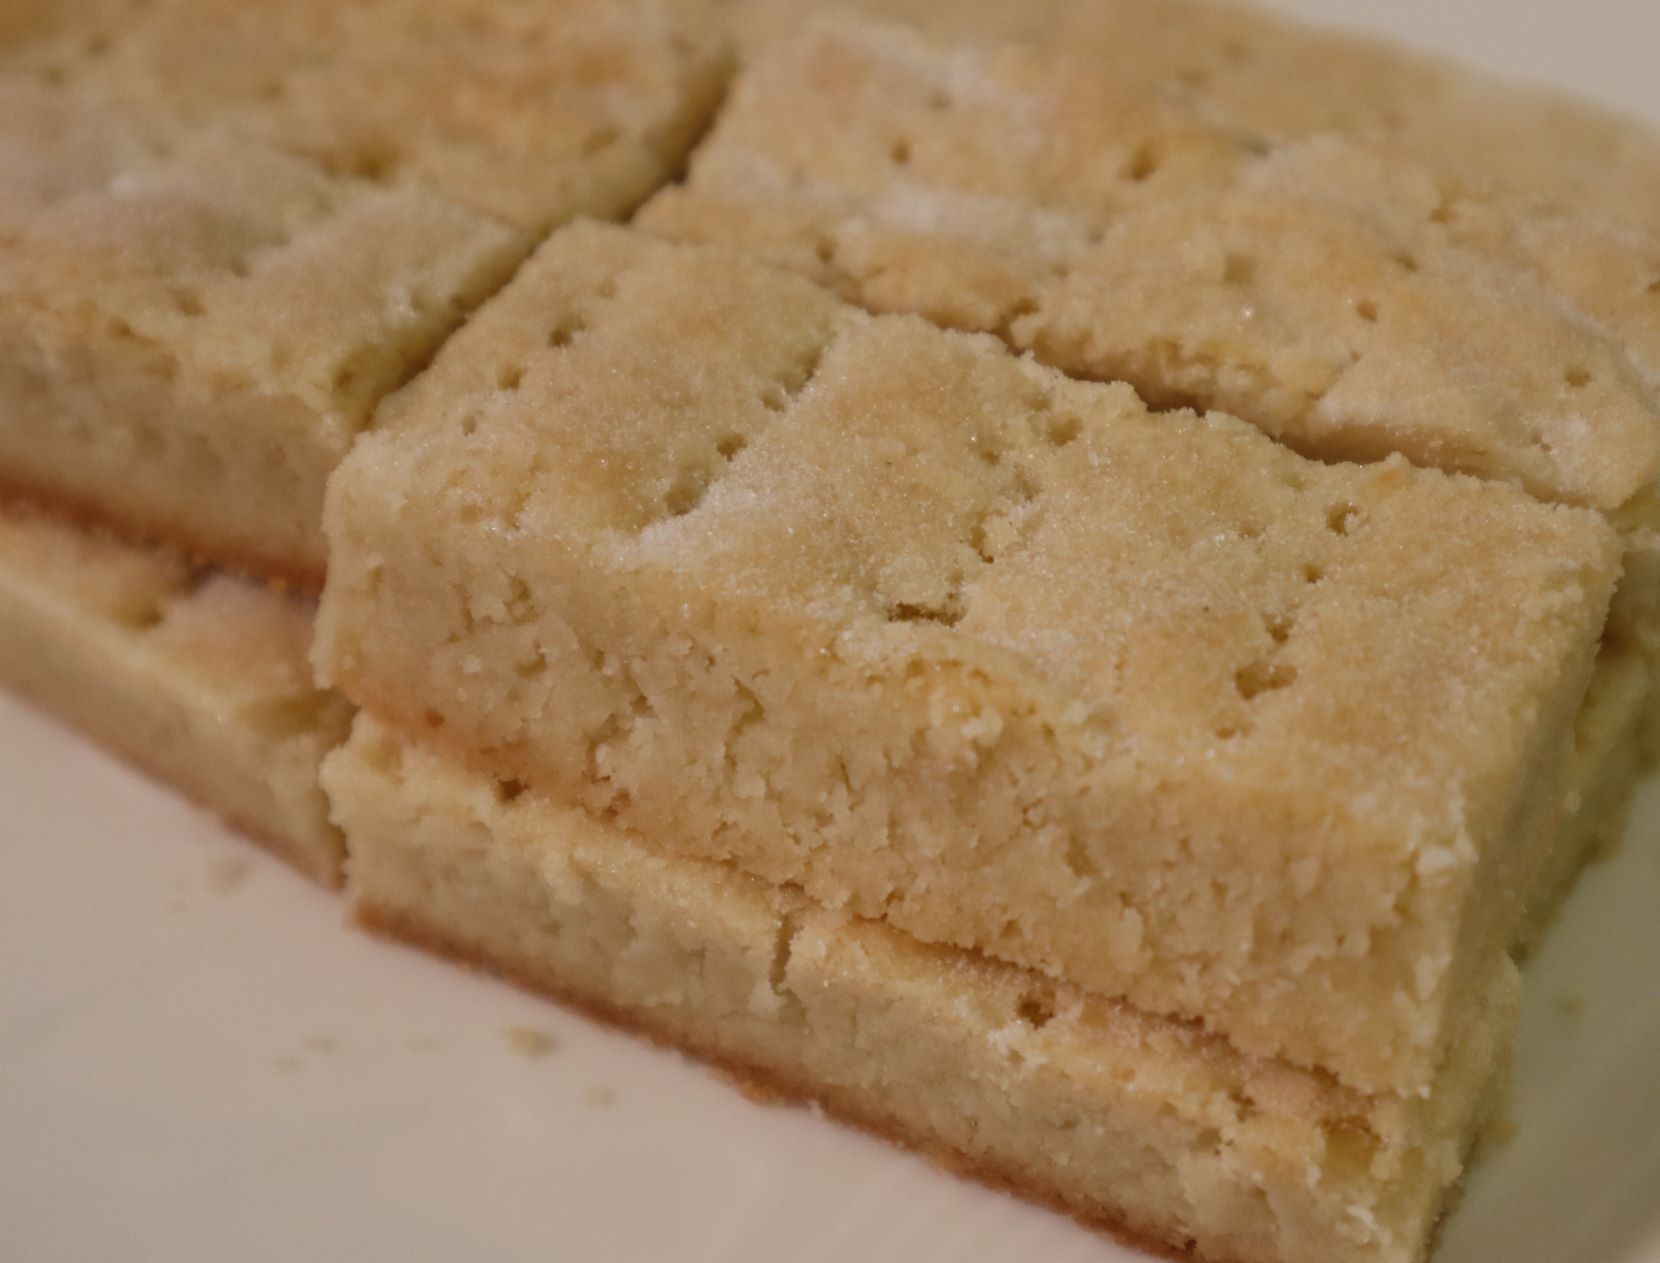 Classic Scottish Shortbread Cookies - International Desserts Blog